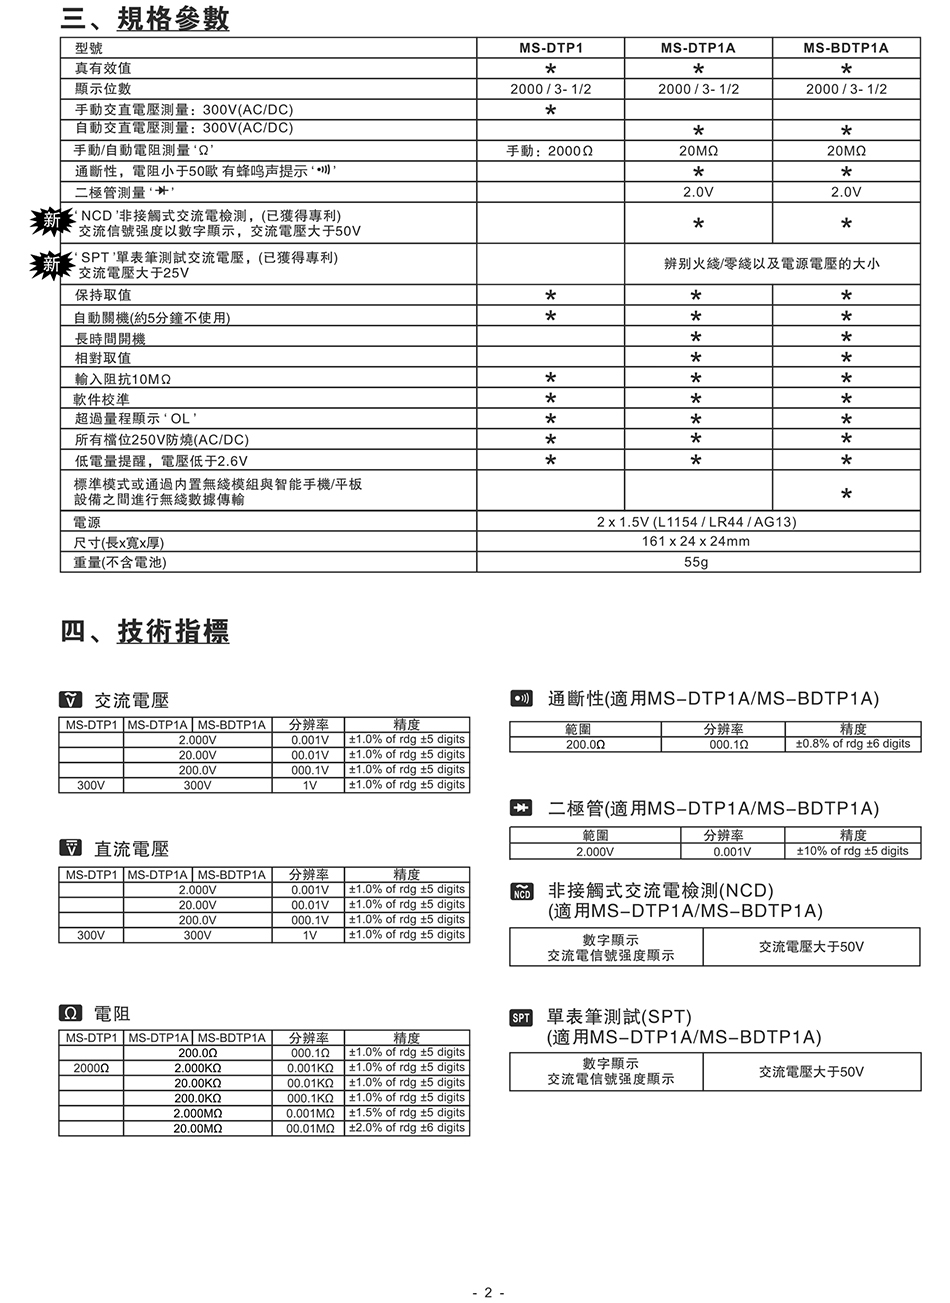 MEET MS-BDTP1A藍牙筆形數字萬用表詳細Catalog介紹（中文）2